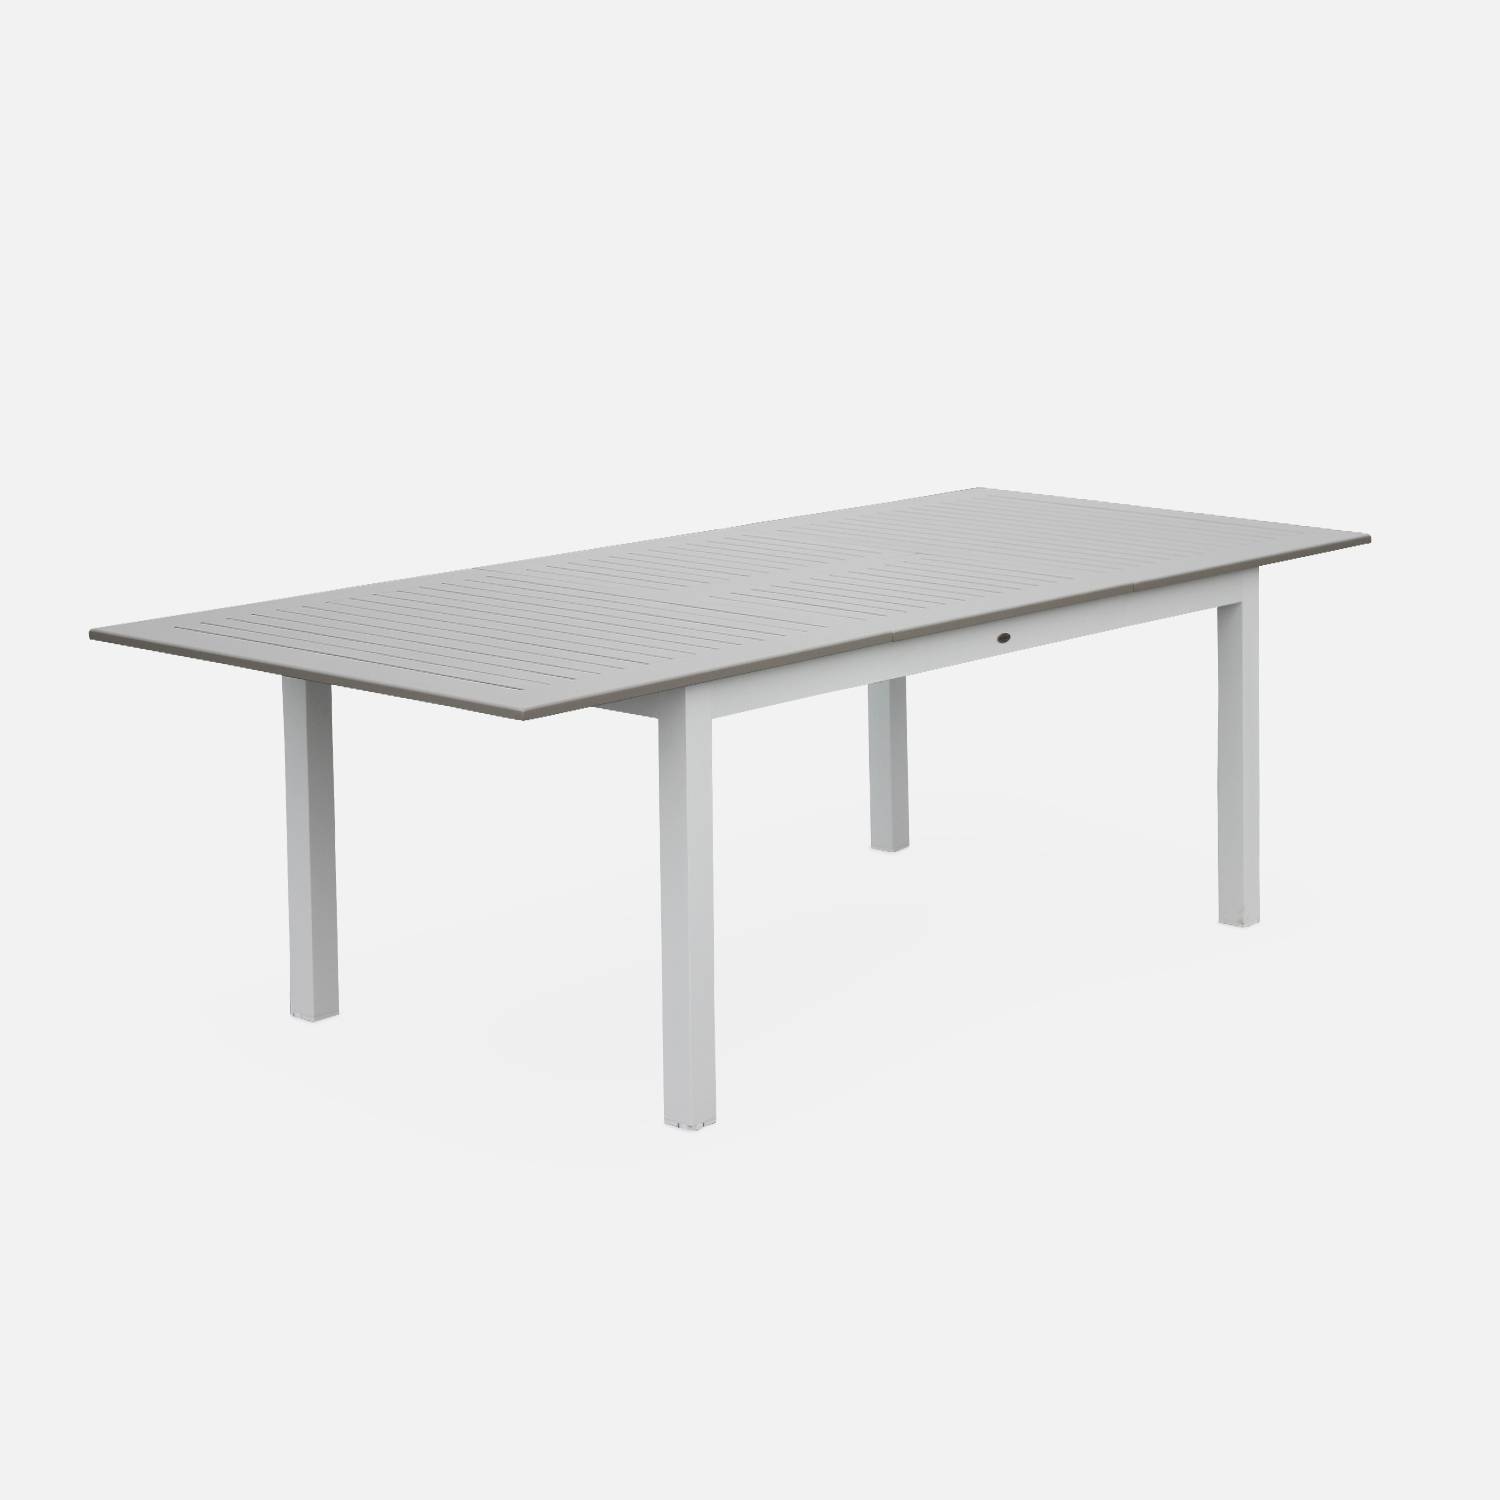 Table à rallonge - Chicago taupe - Table en aluminium 175/245cm avec rallonge Photo1